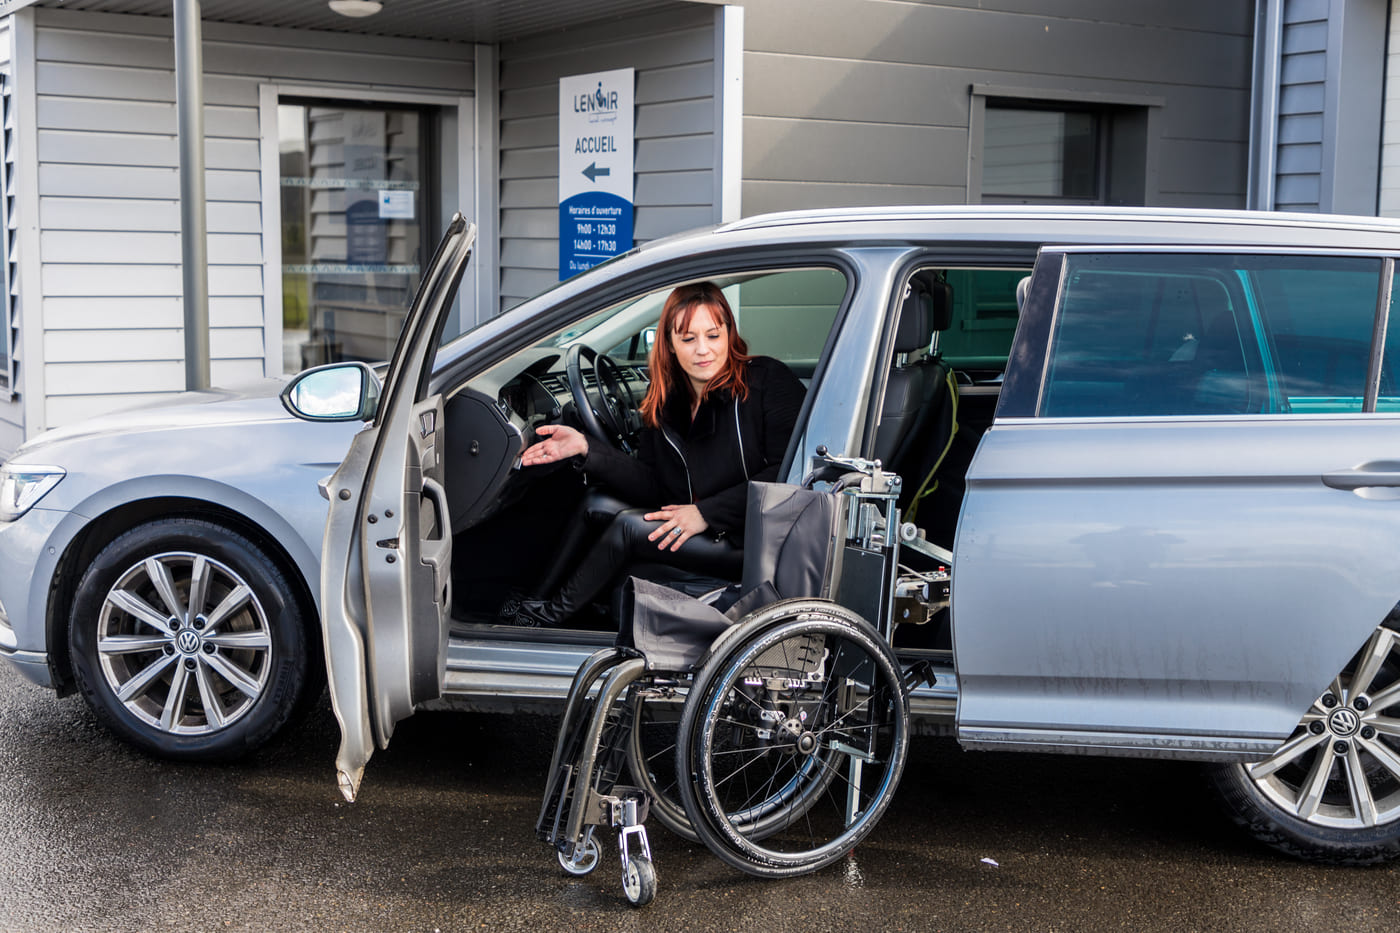 Robot chargeur fauteuil roulant chargement fauteuil roulant voiture